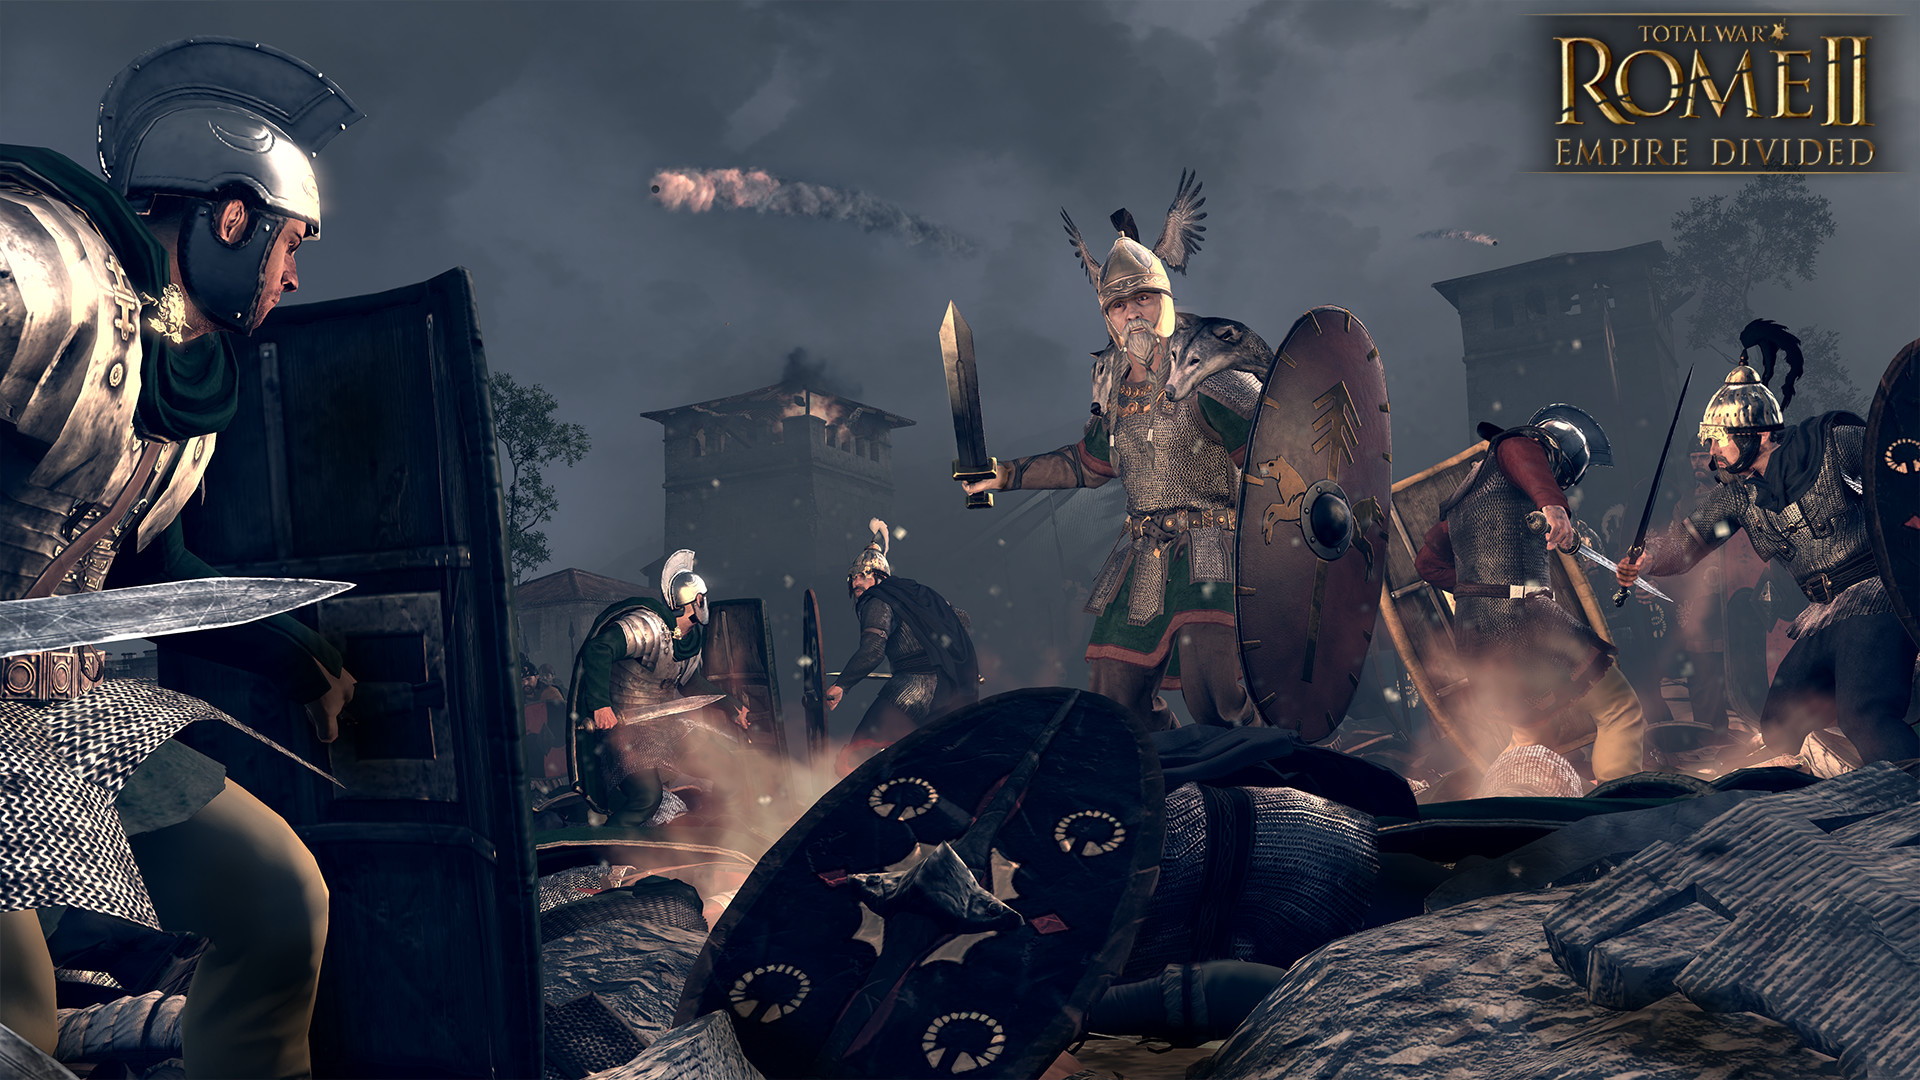 Total War: Rome II - Empire Divided - screenshot 6